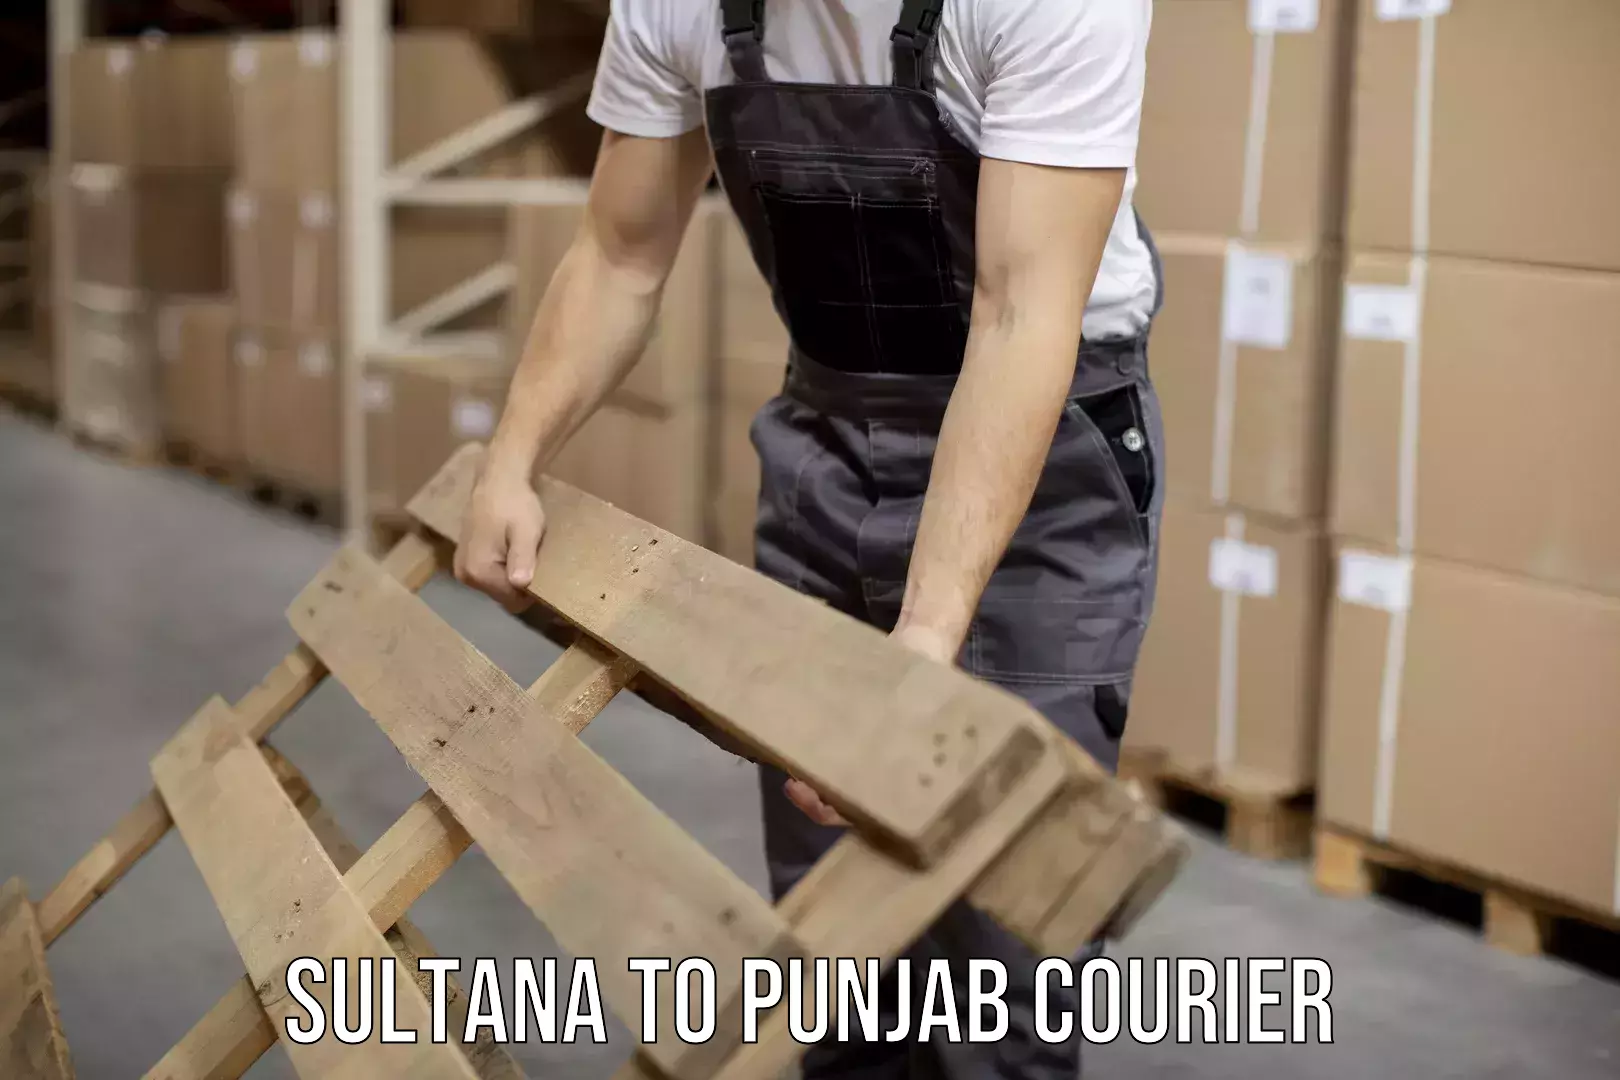 Courier app Sultana to Faridkot